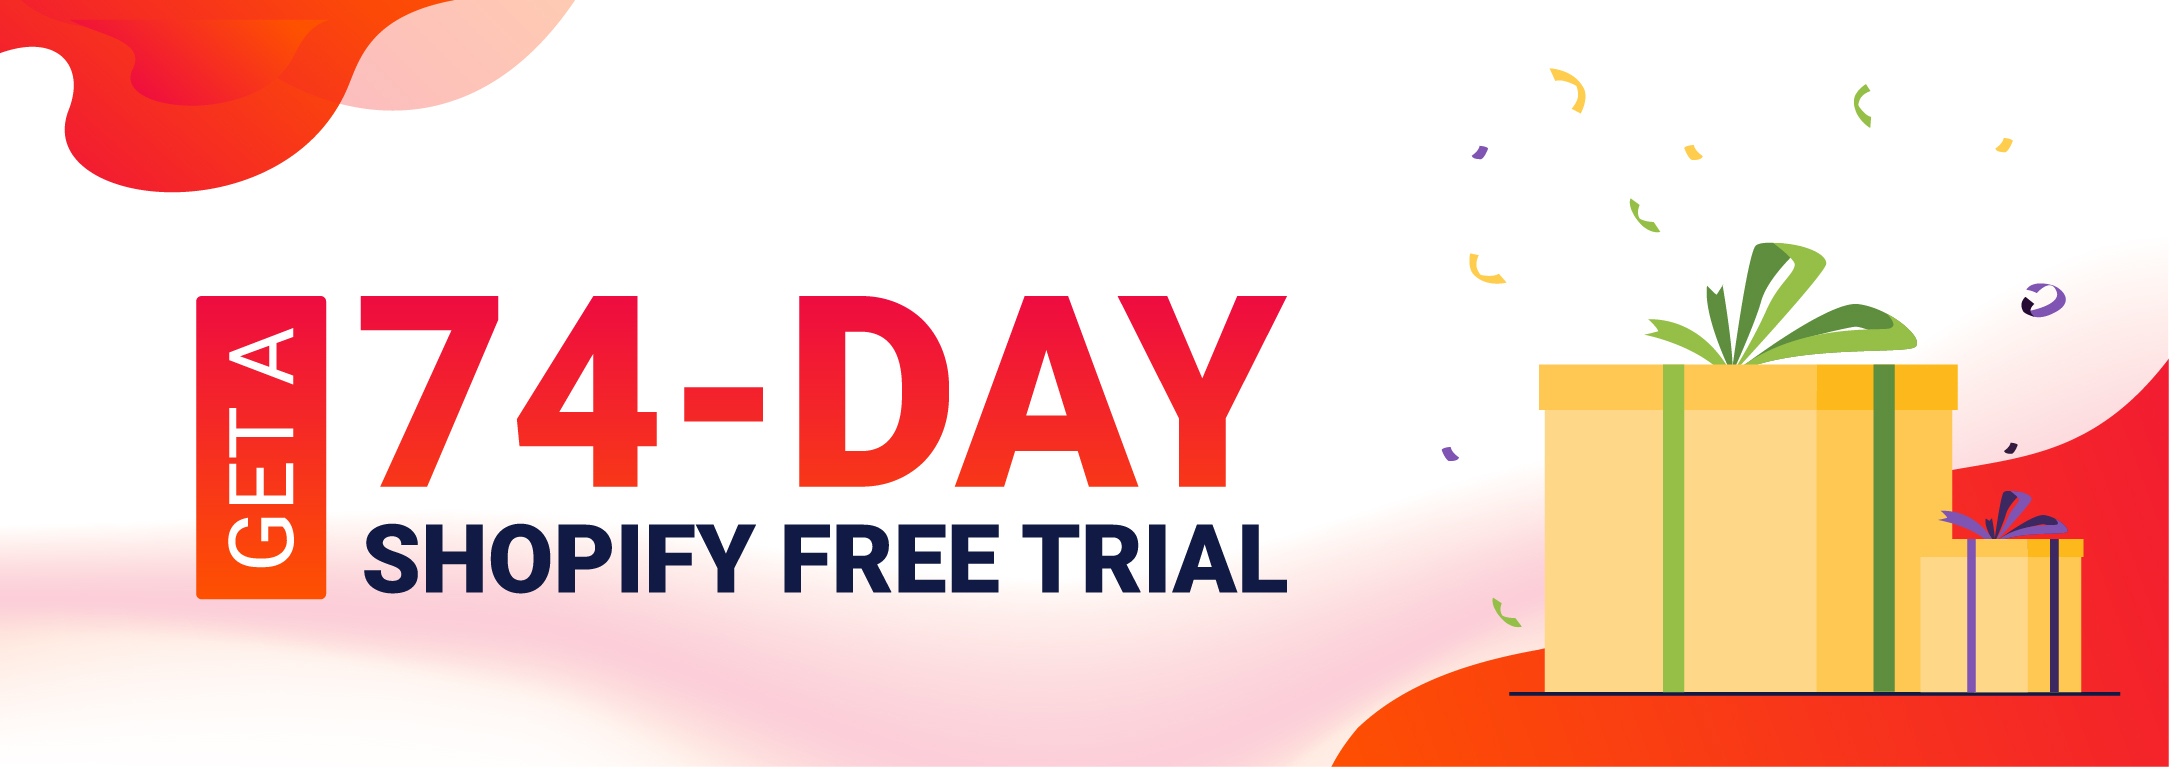 EPP Event  74days Shopify Free Trial